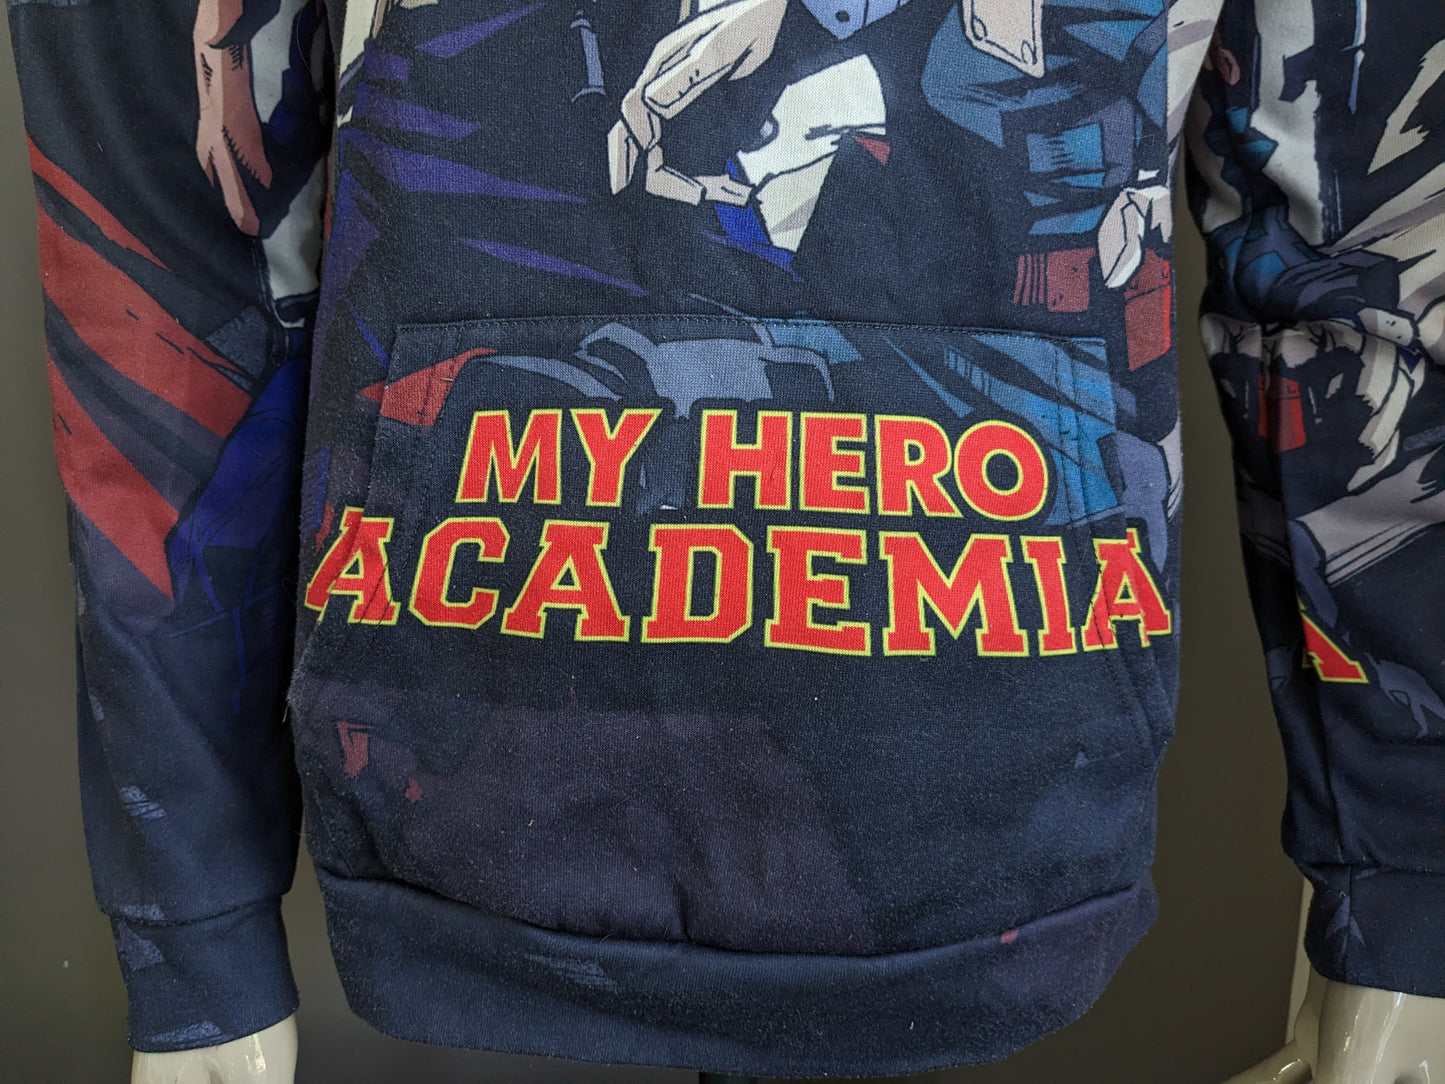 My Hero Academia Hoodie. Stampa colorata. Taglia L.